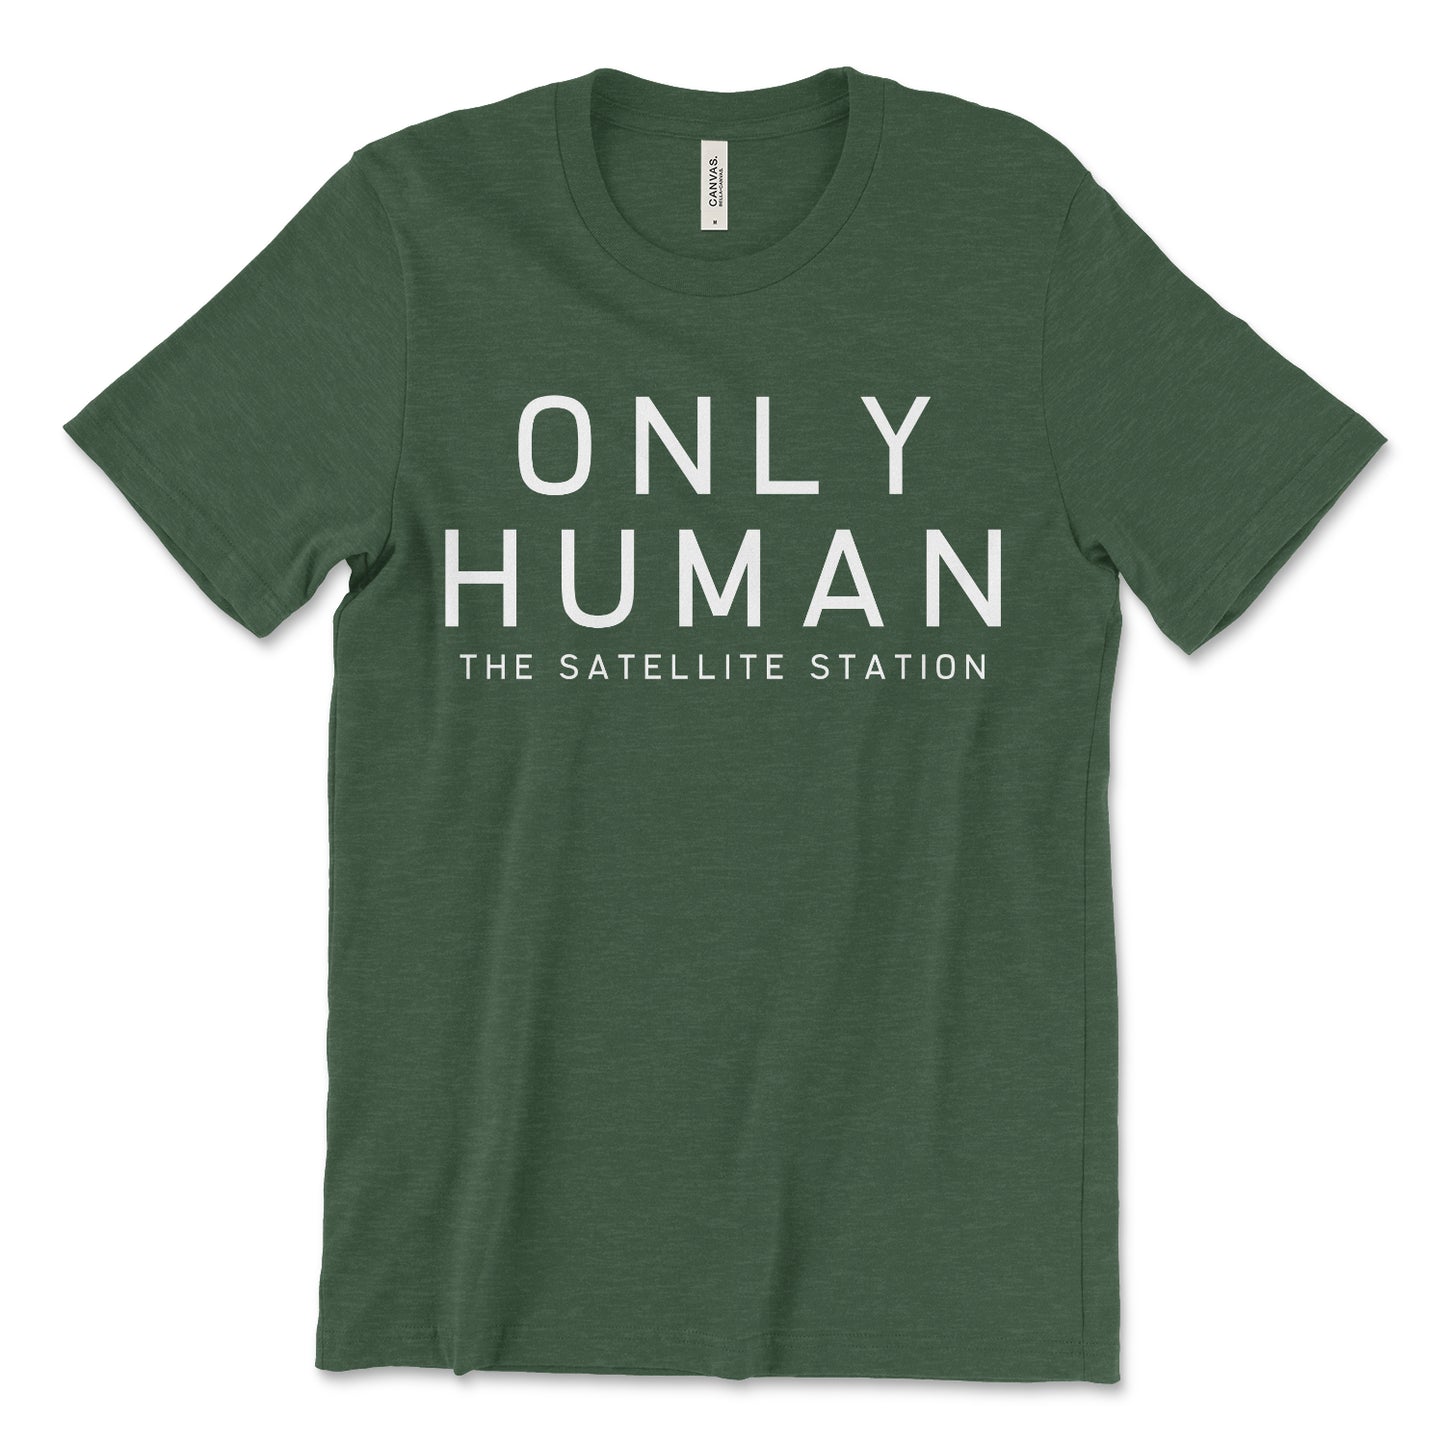 The Satellite Station "Only Human" Short-Sleeve Unisex T-Shirt